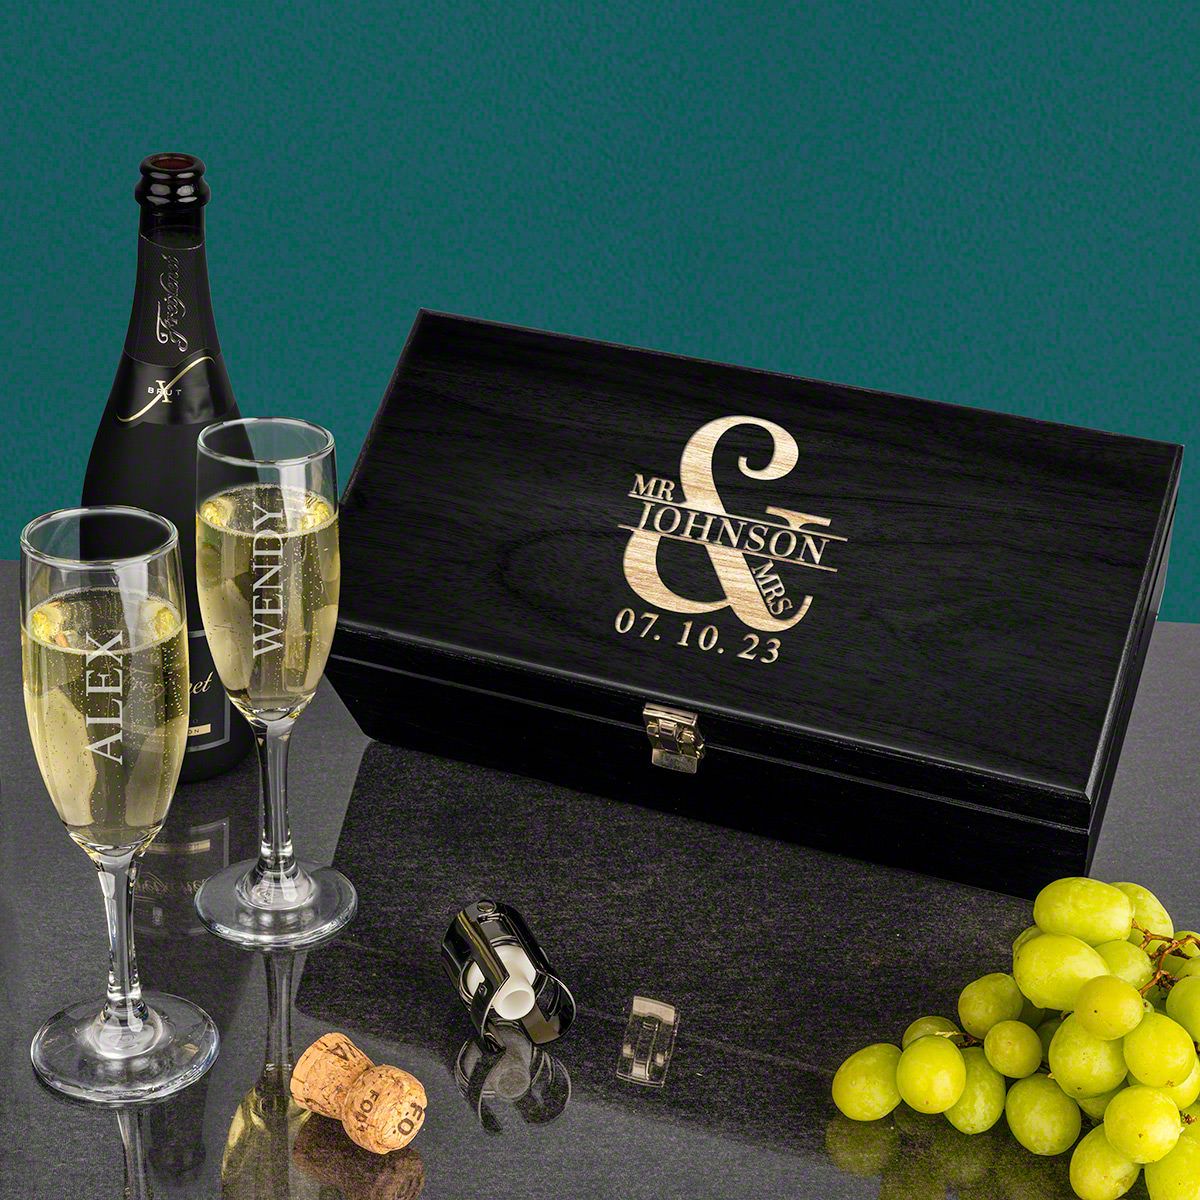 Gift Box Champagne 3, Regalos Personalizados